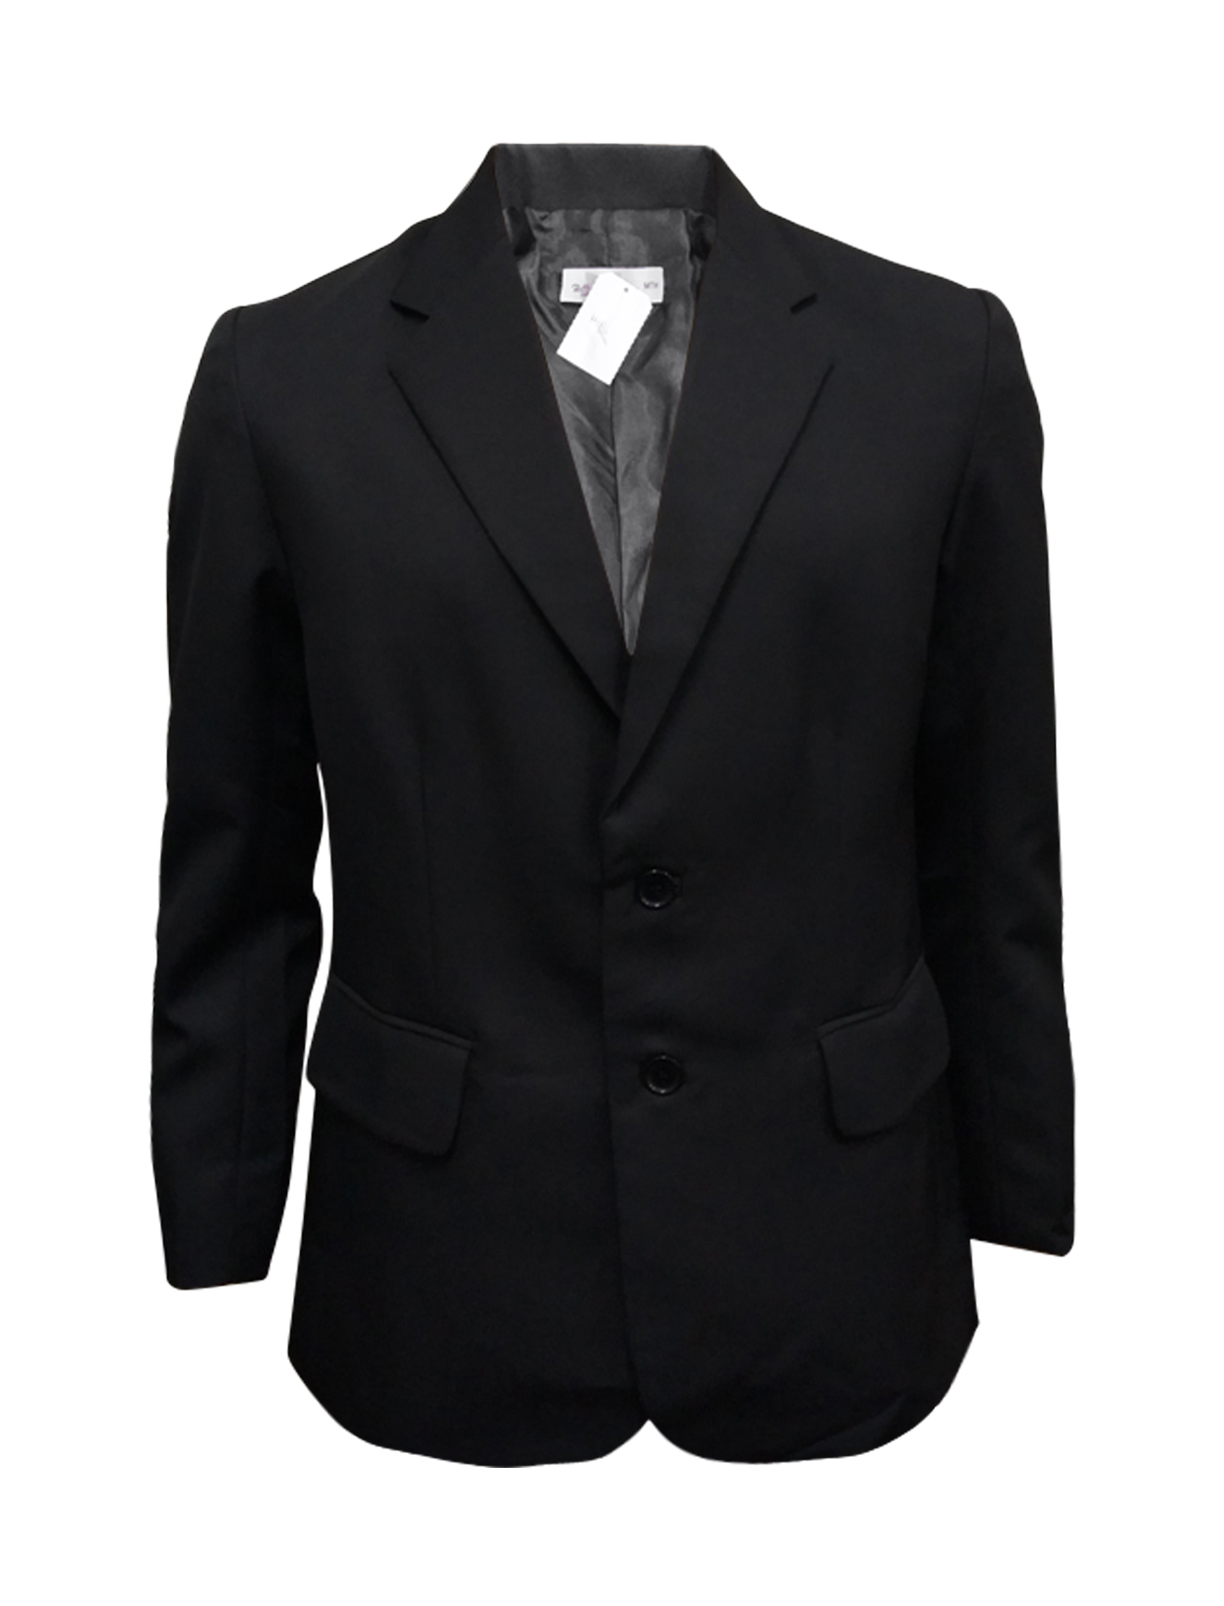 BKSRE018 – Customized Male Black Long Sleeve Jacket – Uniform Online